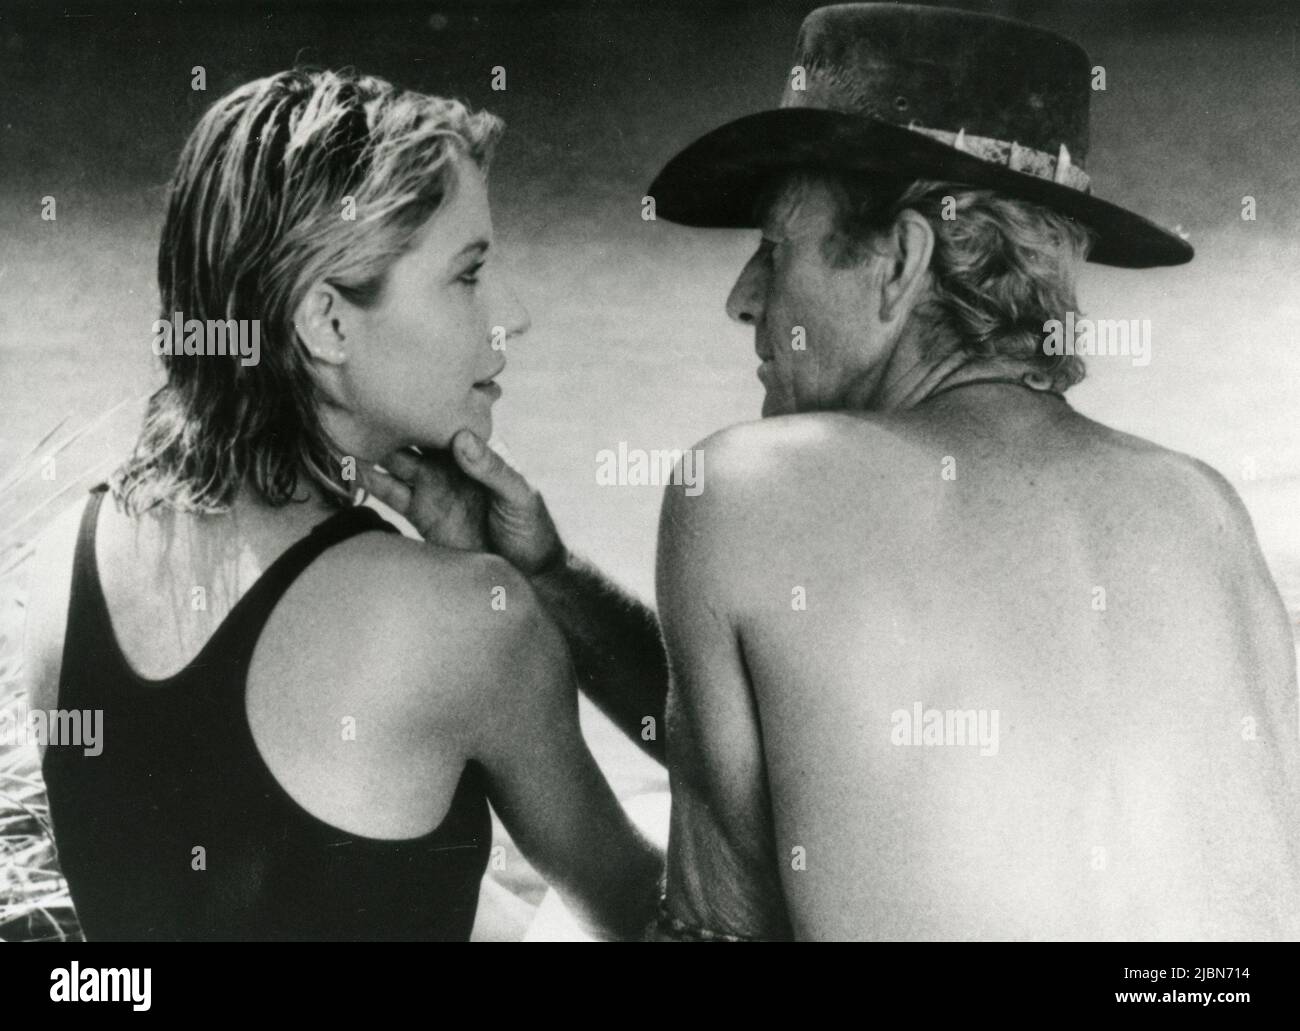 L'attrice americana Linda Kozlowski e l'attore Paul Hogan nel film Crocodile Dundee, Australia 1986 Foto Stock